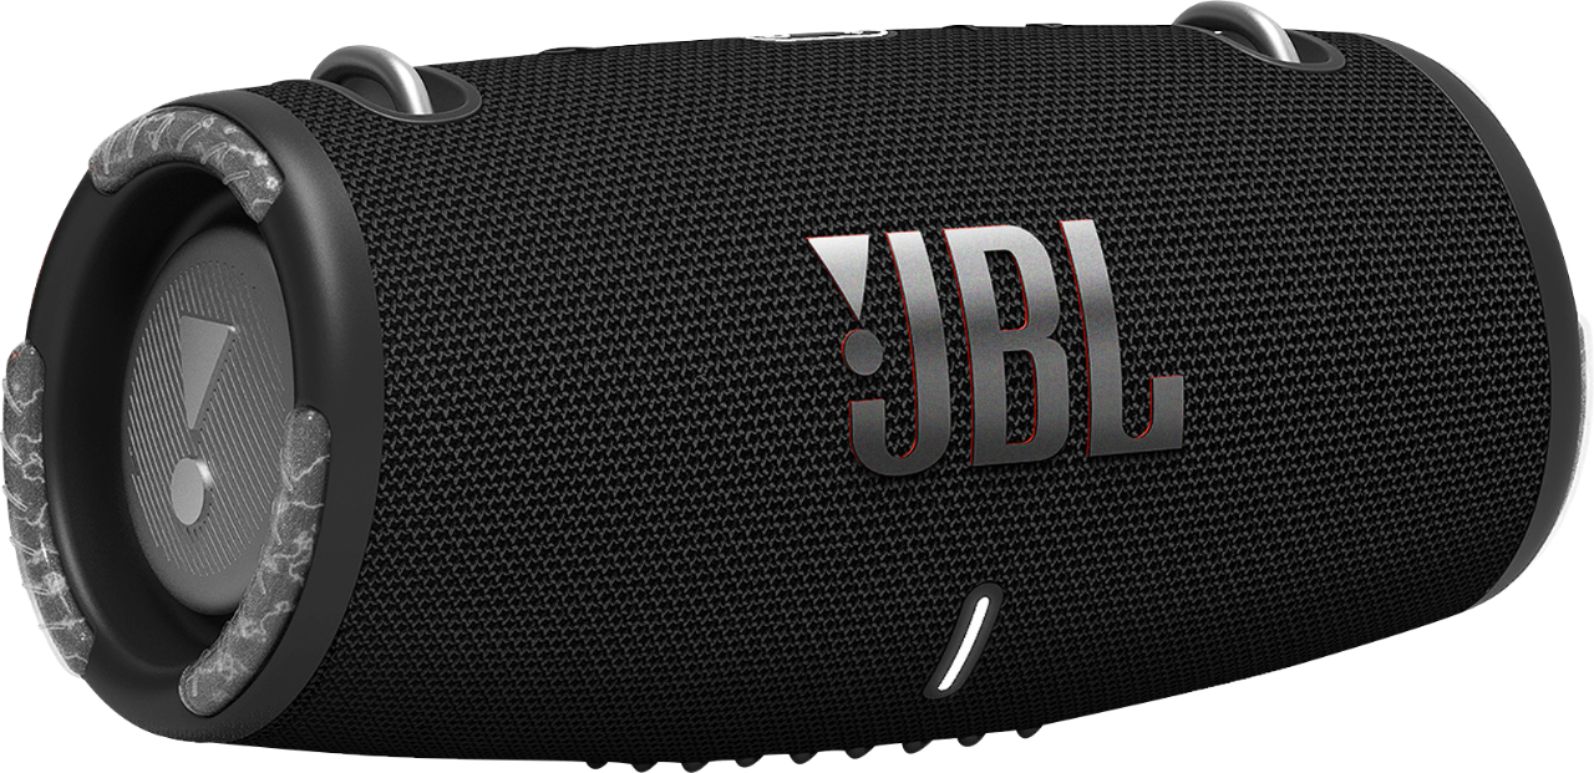 JBL Xtreme 3 BT Speaker in Black JBLXTREME3BLKAM - The Home Depot